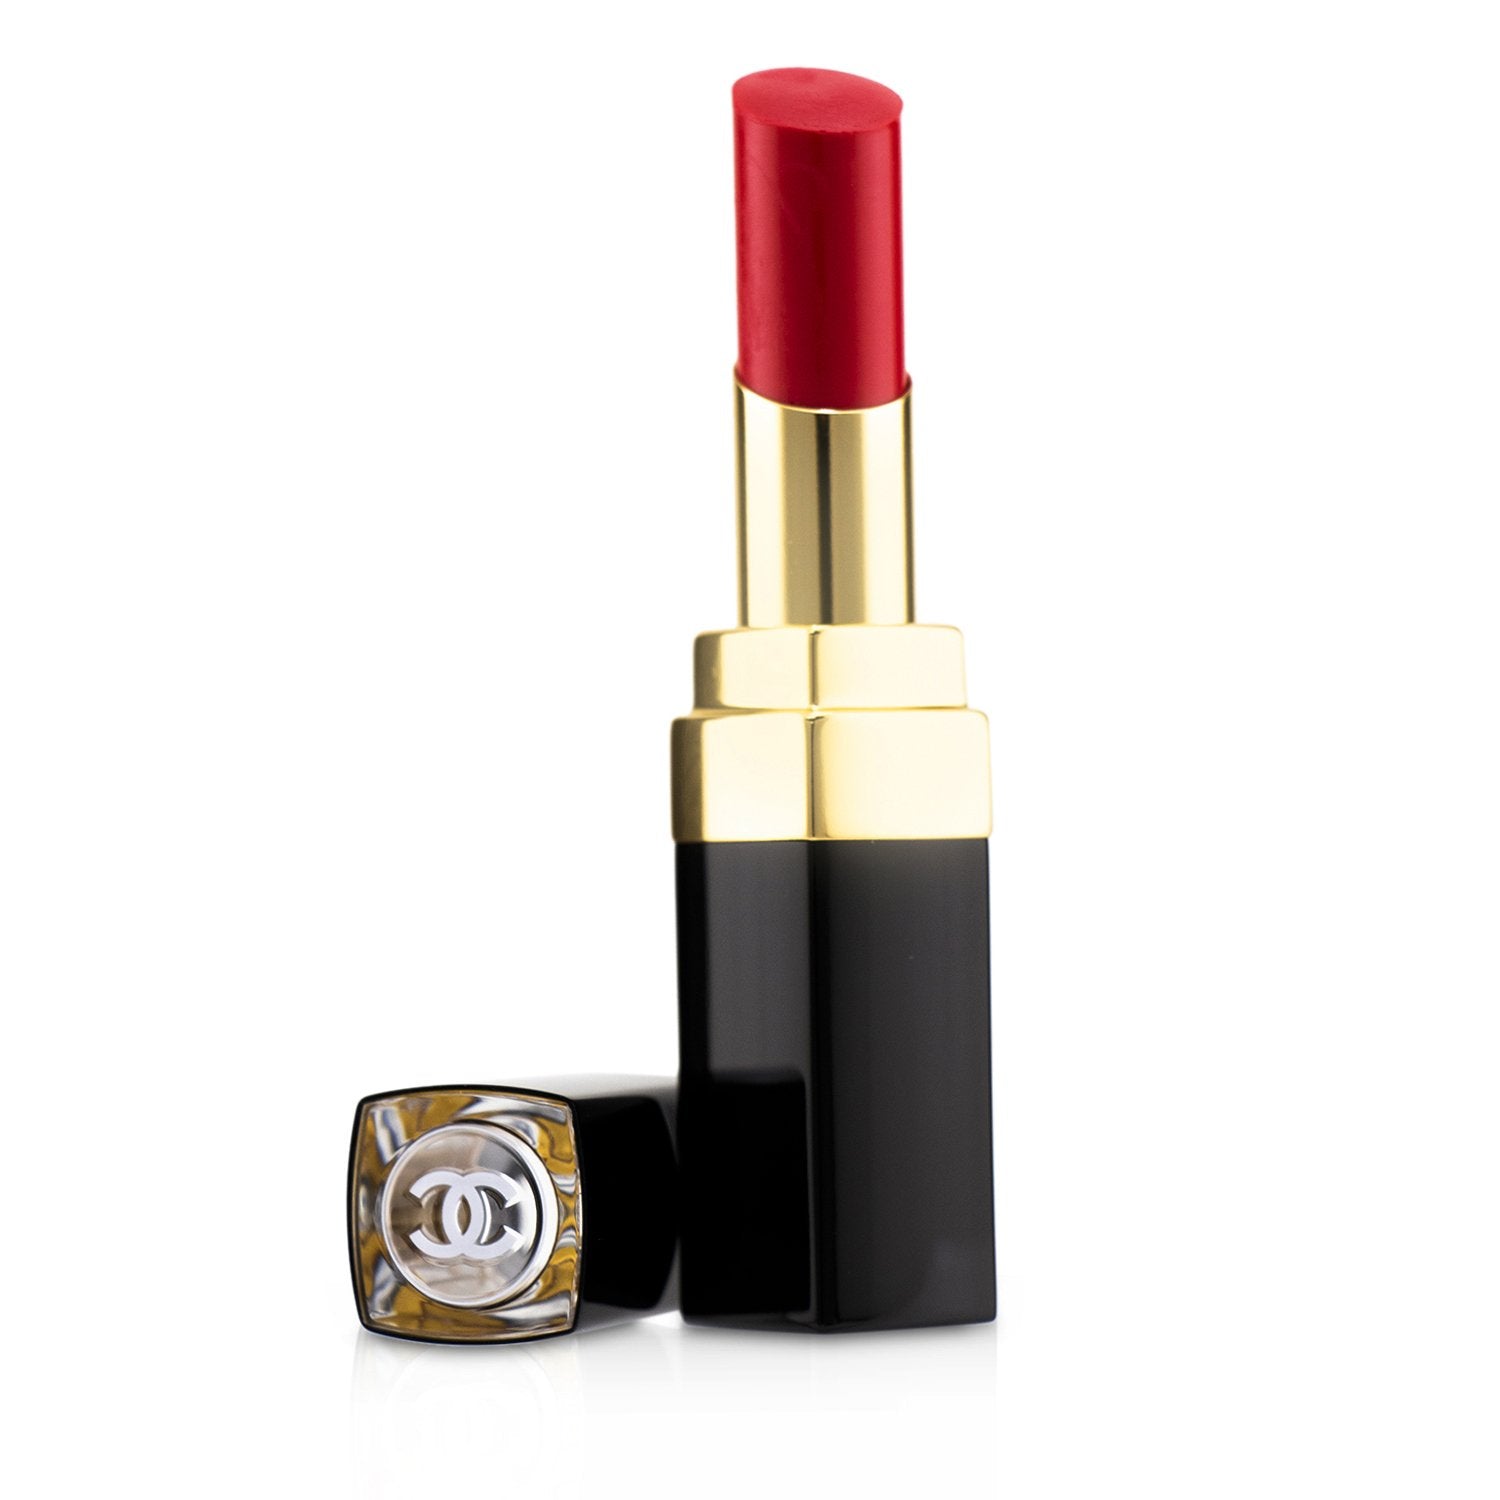 Chanel Rouge Coco Flash Hydrating Vibrant Shine Lip Colour - # 86